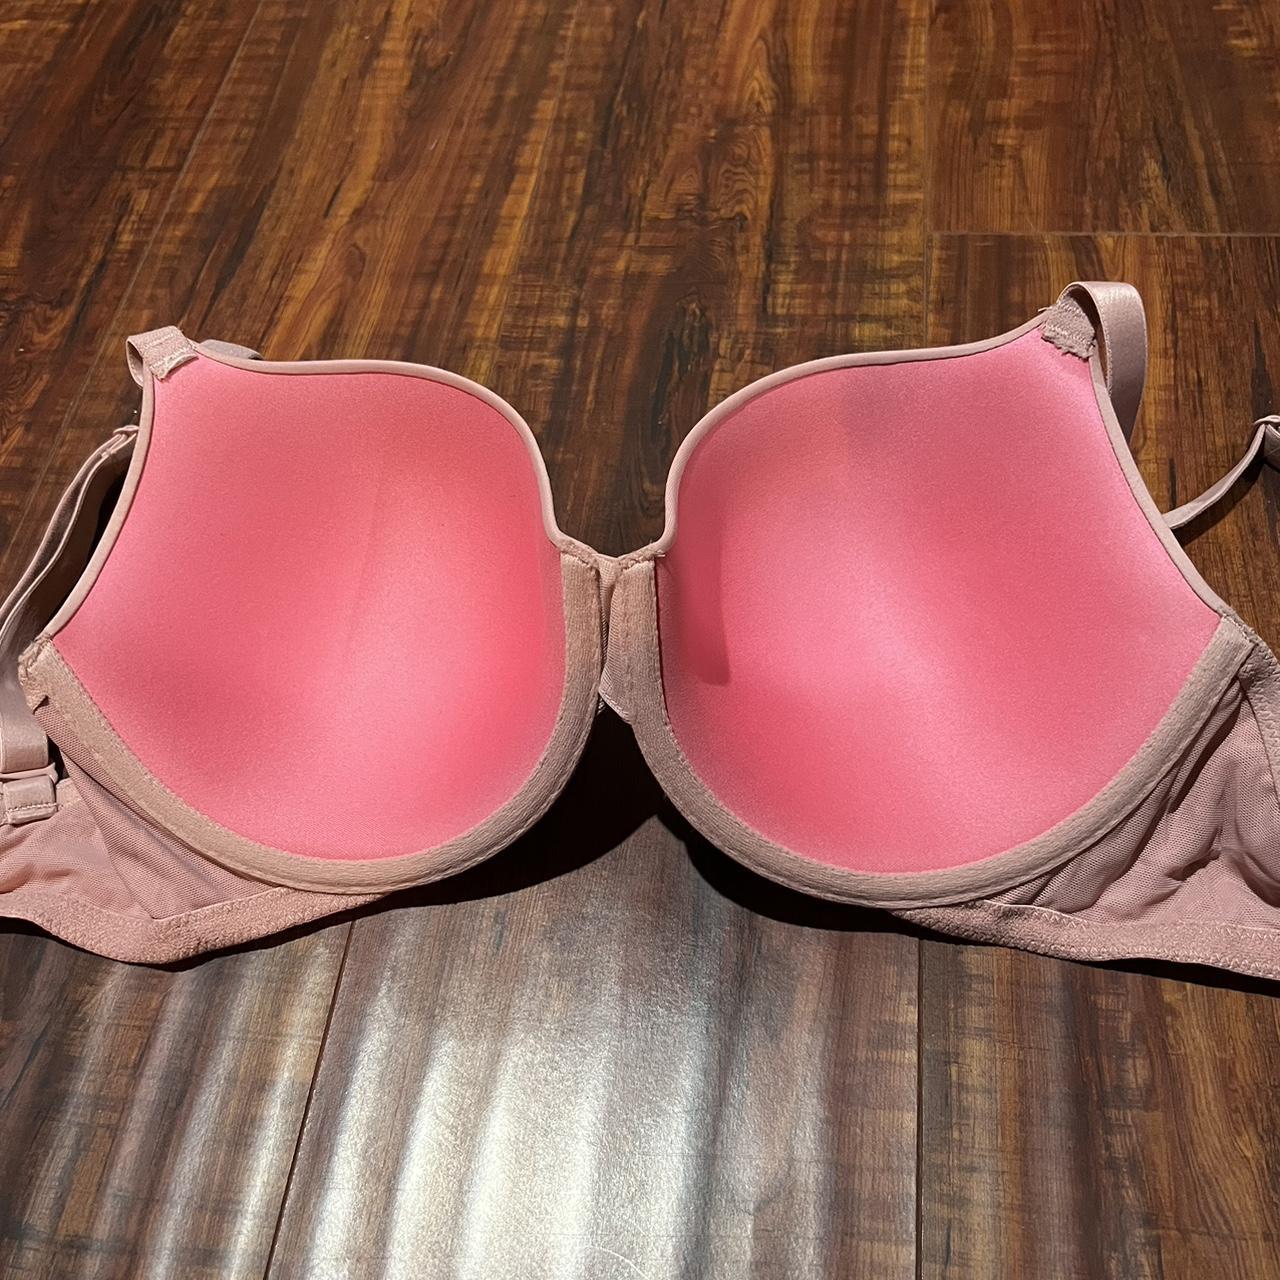 victoria's secret pink bra 34b worn but no flaws, - Depop